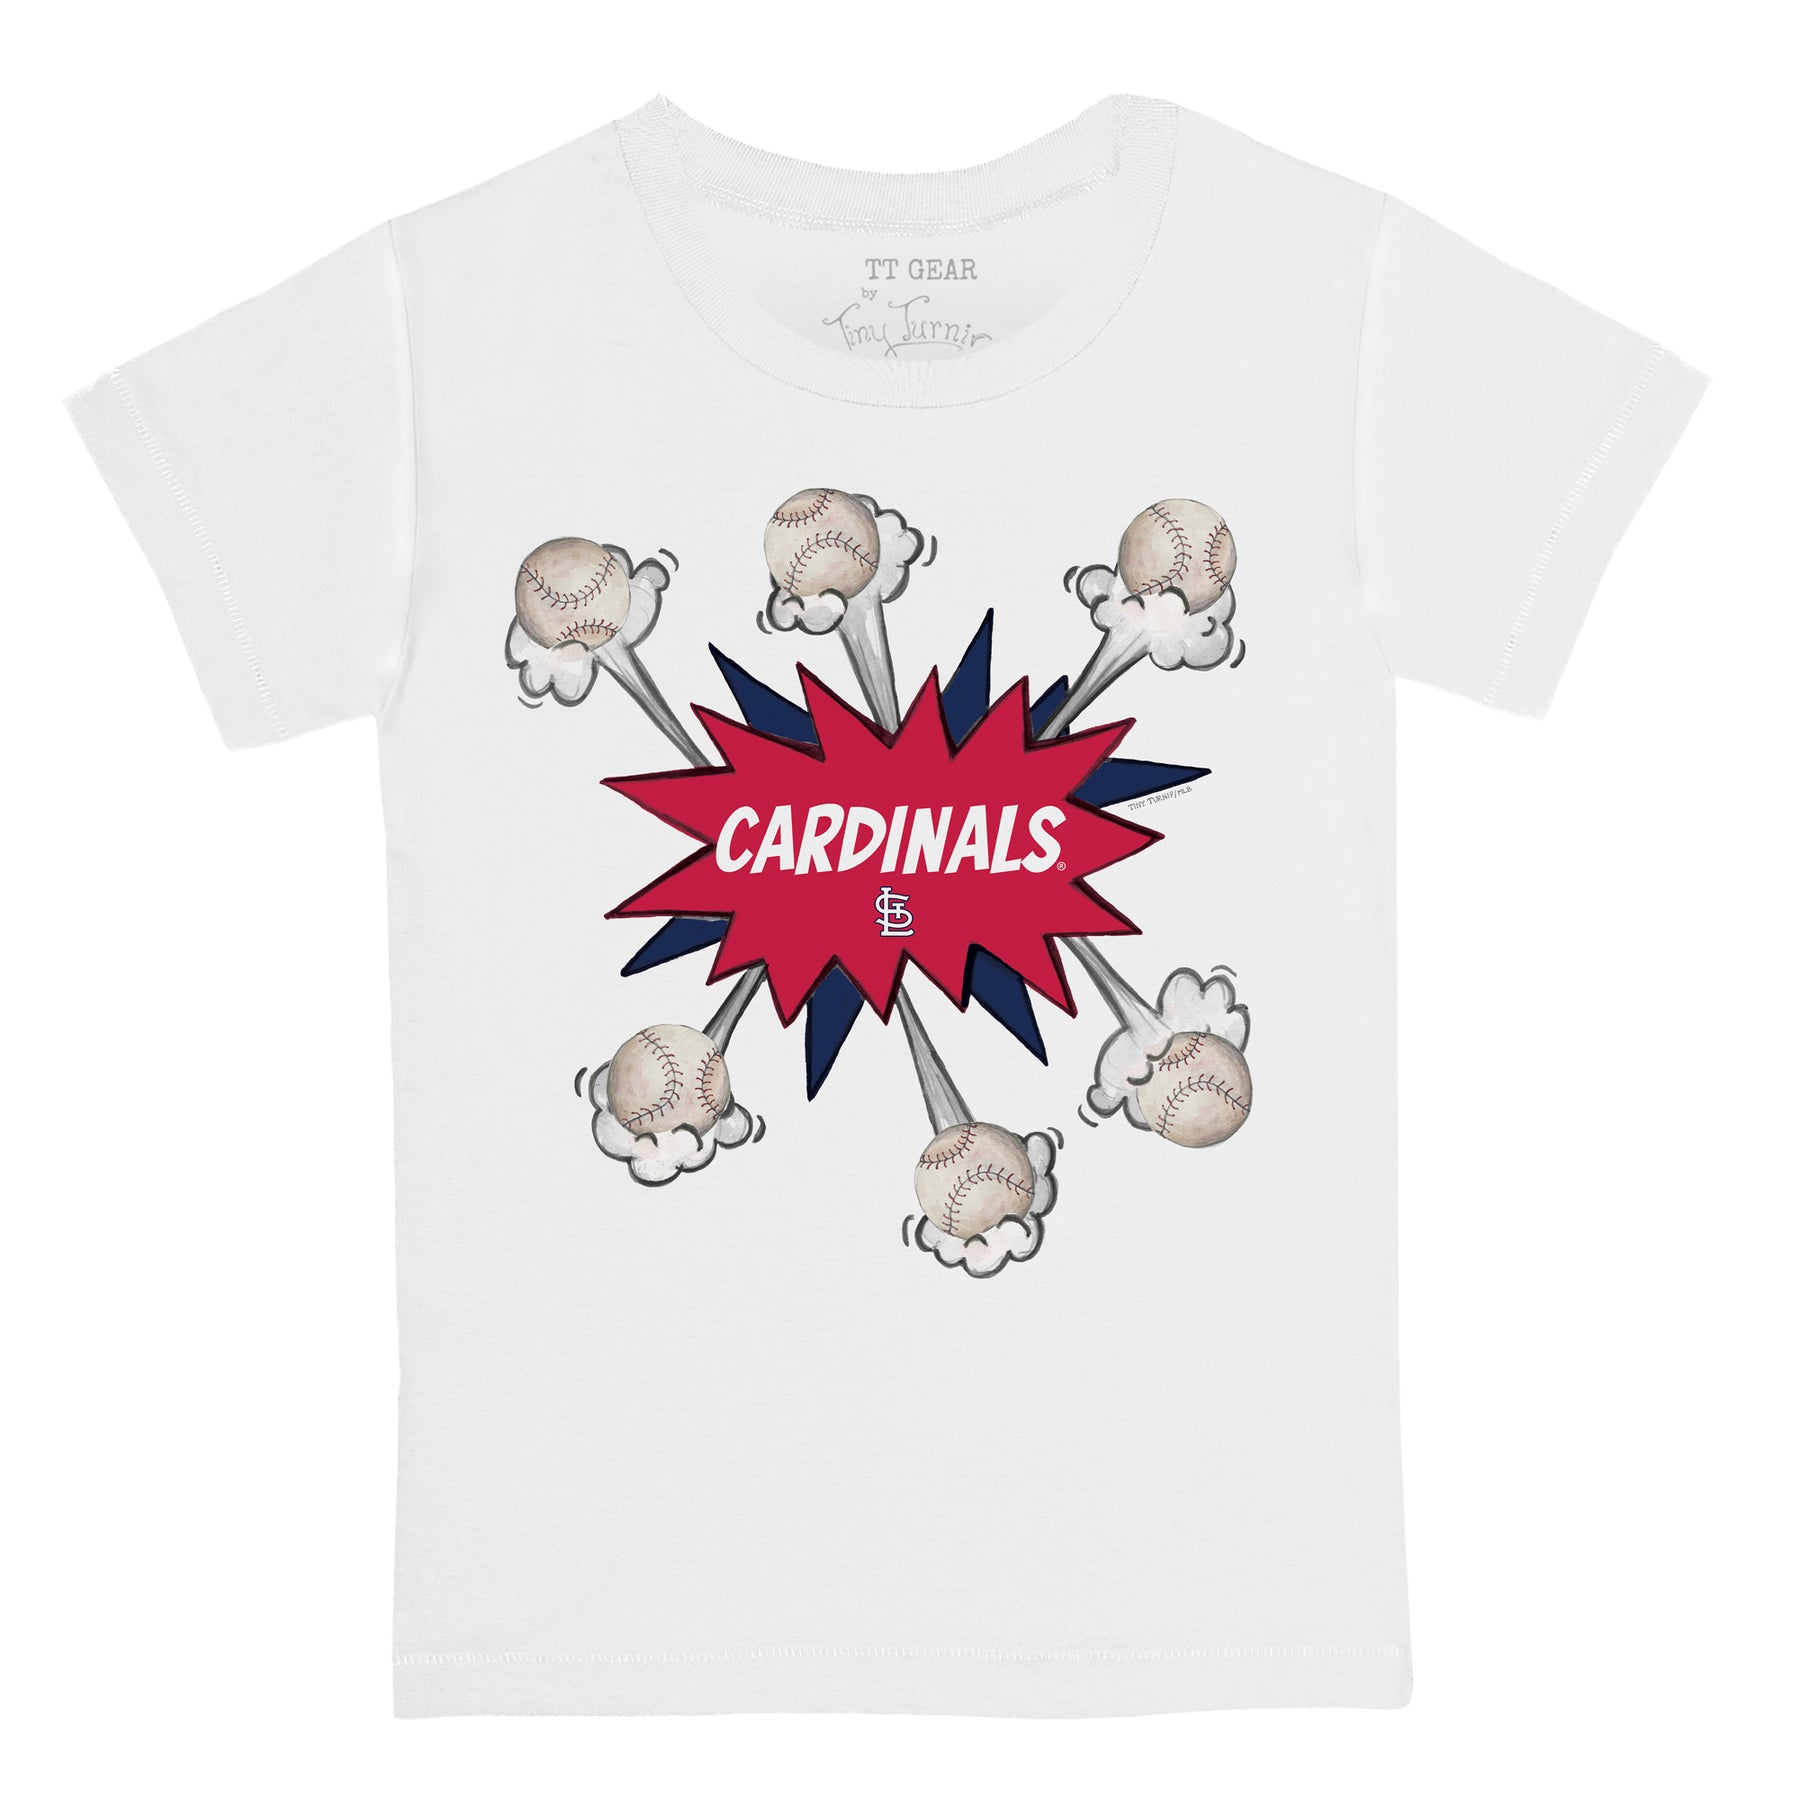 Tiny Turnip St. Louis Cardinals Hot Bats Tee Shirt Women's XL / White